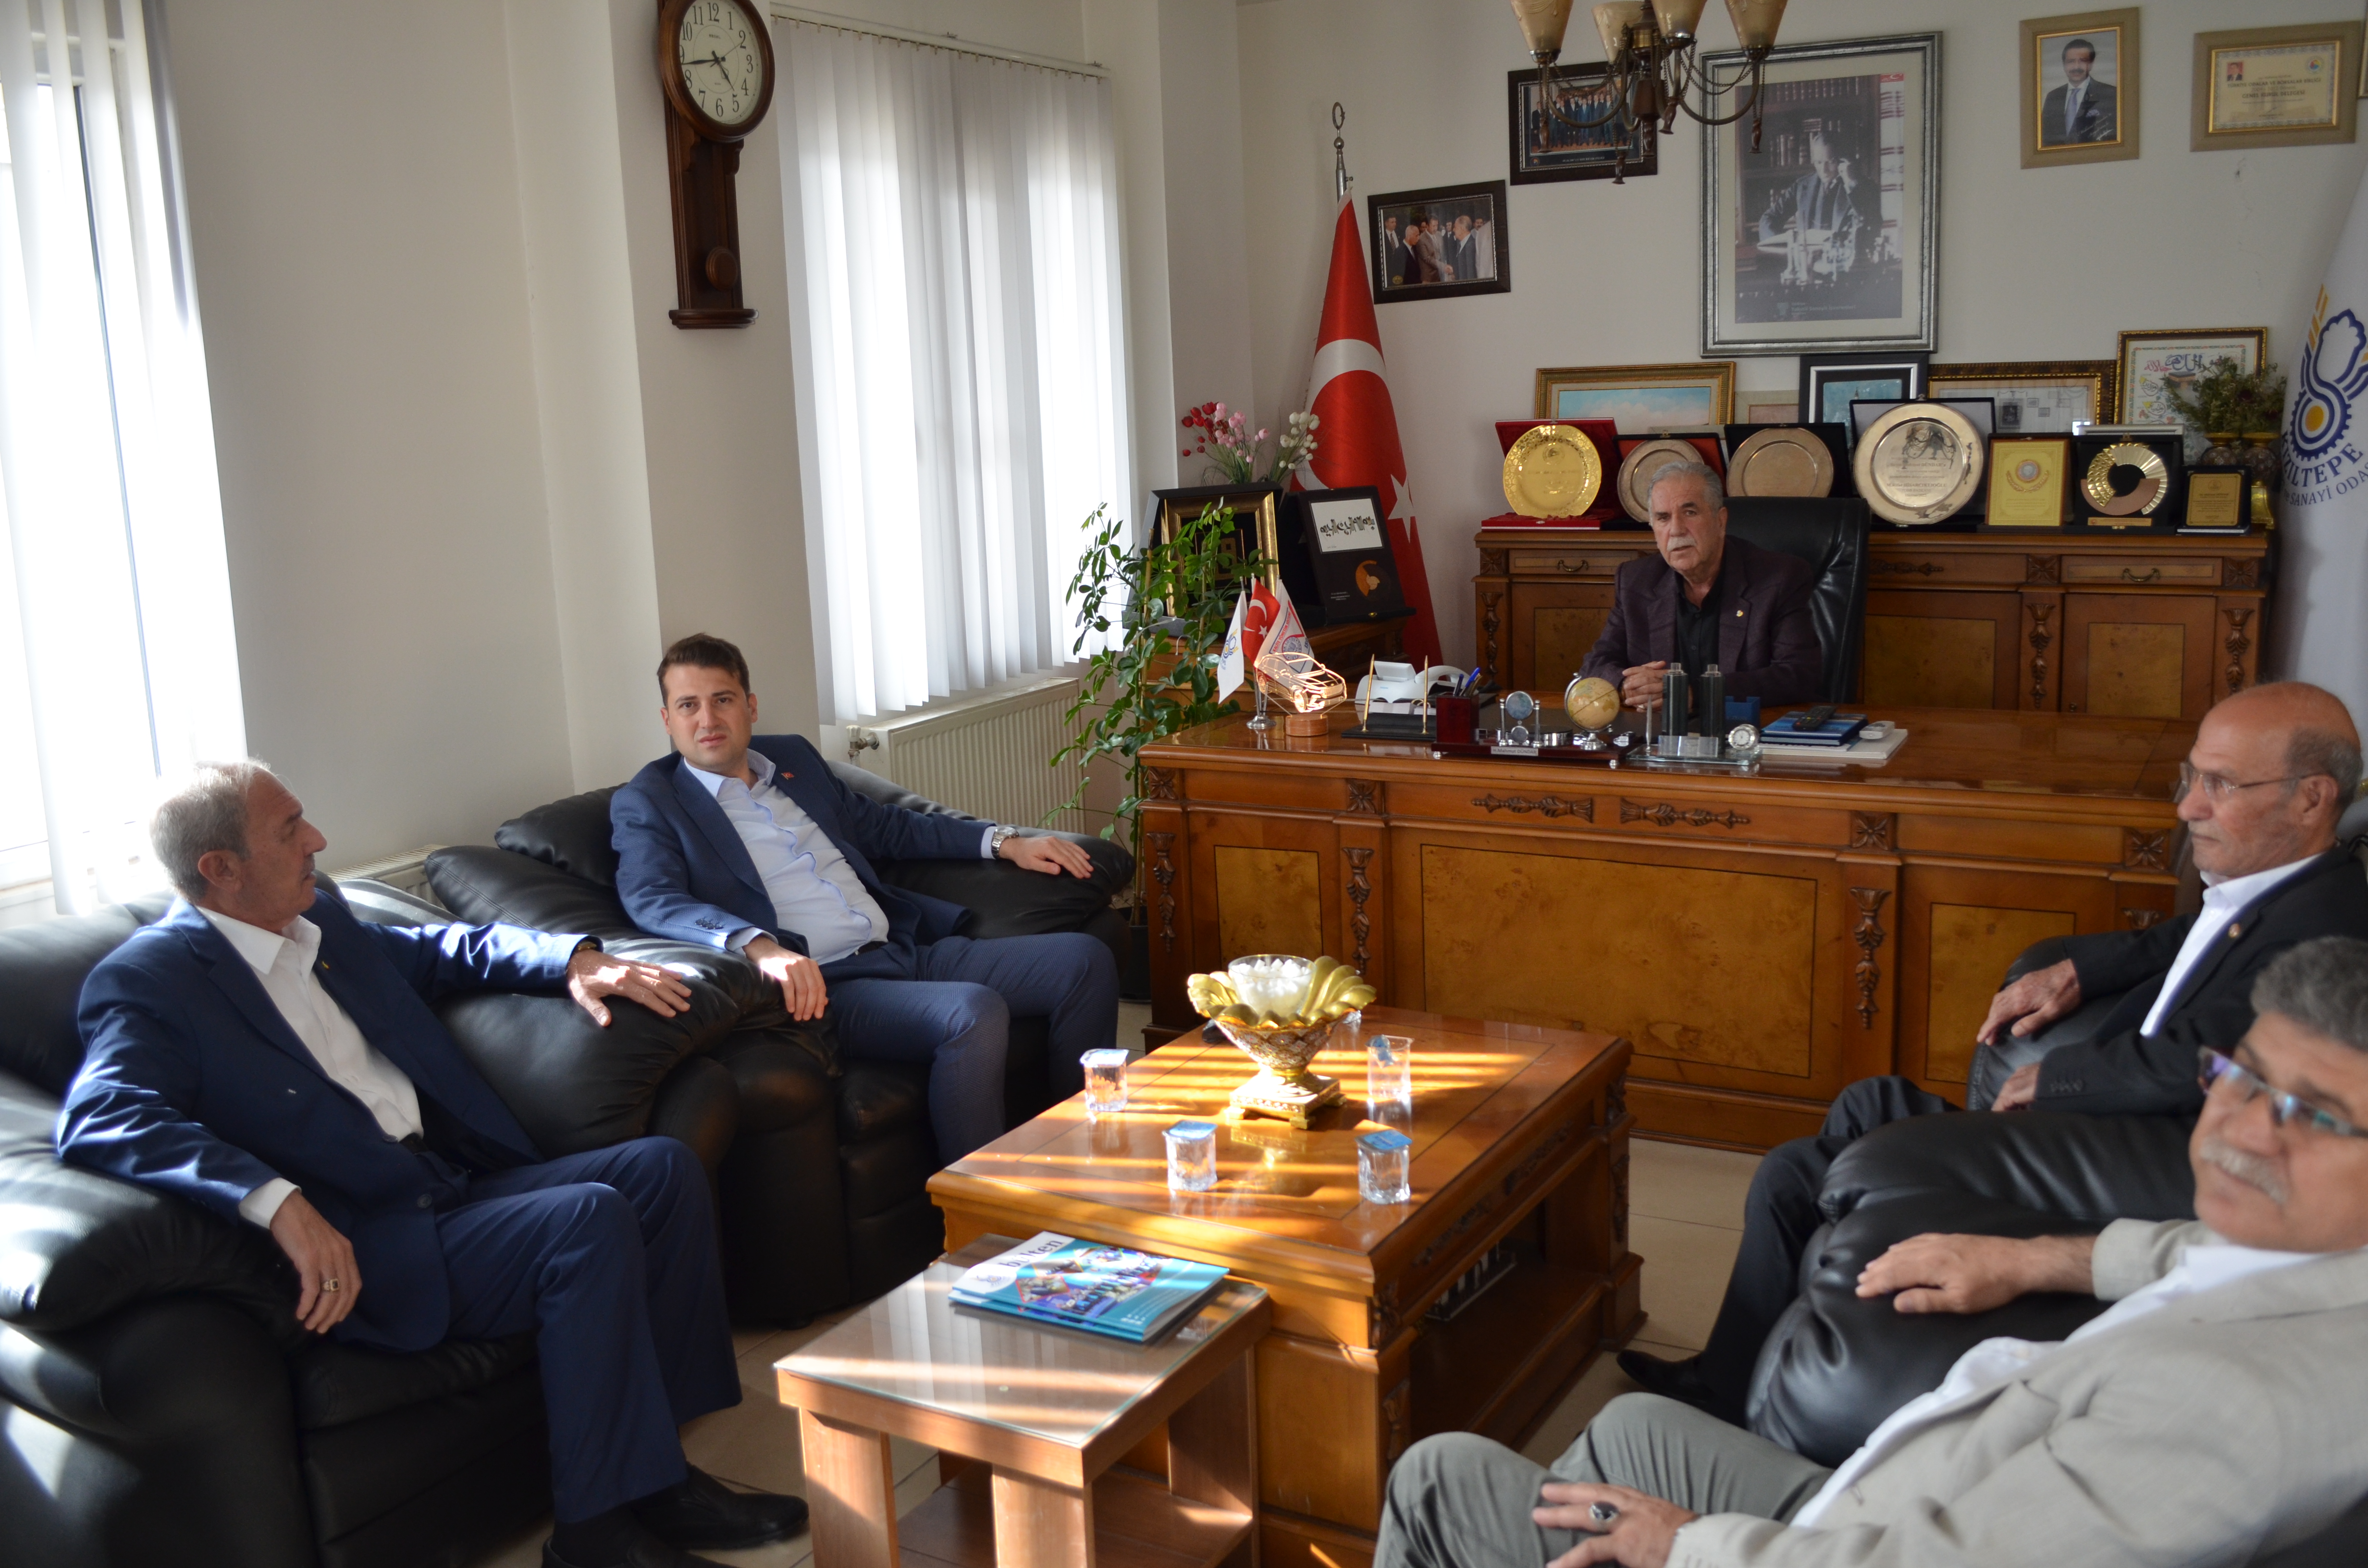 Kzltepe governor Fatih Cdrolu visited our room.